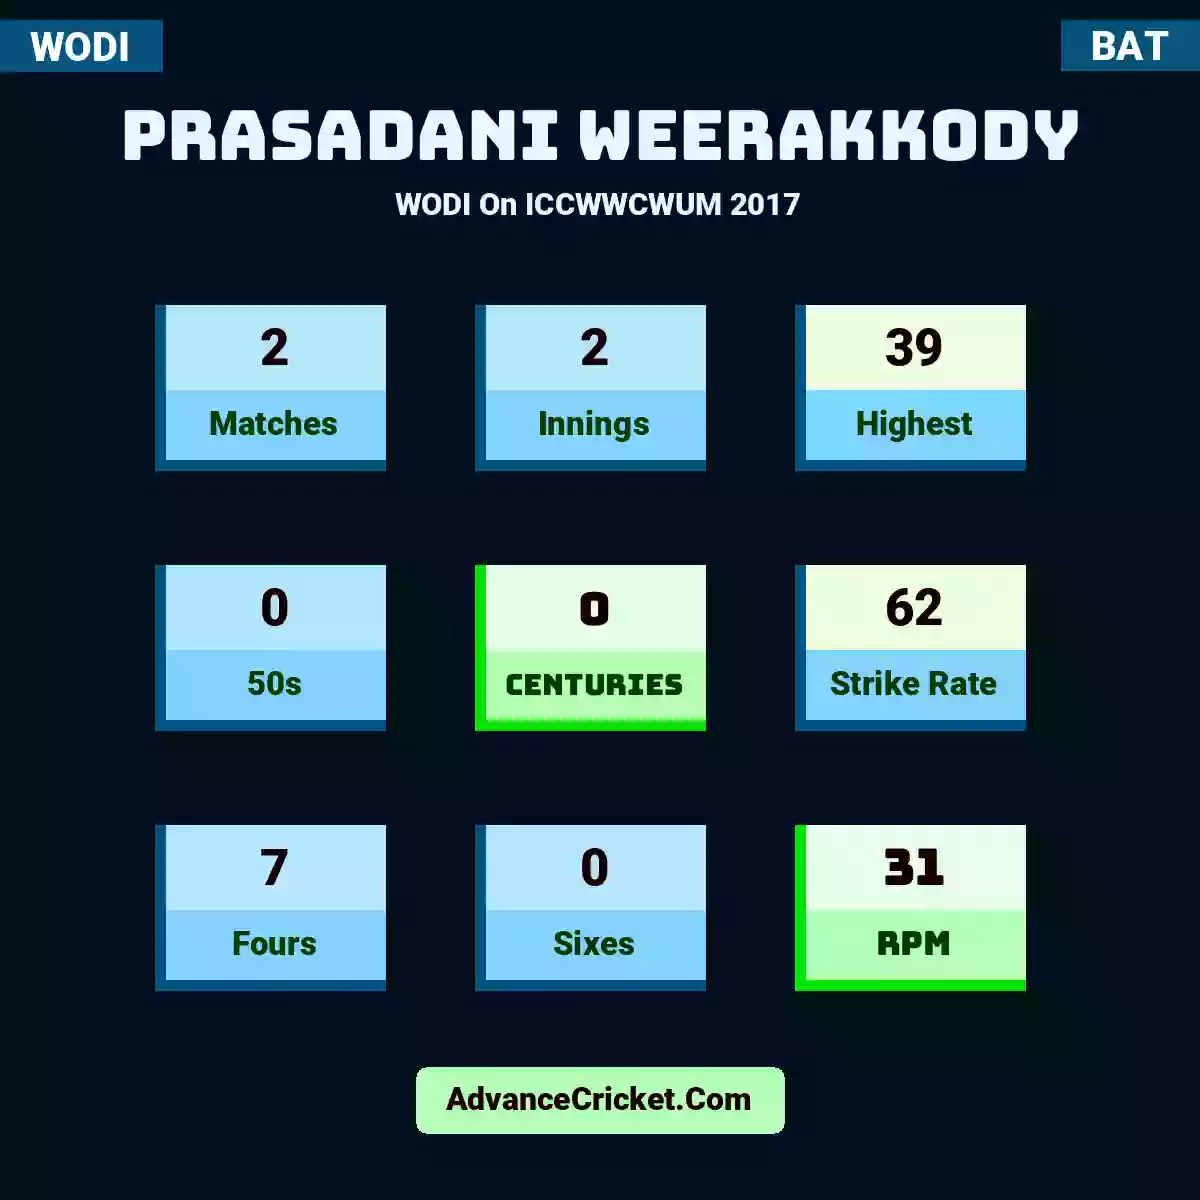 Prasadani Weerakkody WODI  On ICCWWCWUM 2017, Prasadani Weerakkody played 2 matches, scored 39 runs as highest, 0 half-centuries, and 0 centuries, with a strike rate of 62. P.Weerakkody hit 7 fours and 0 sixes, with an RPM of 31.